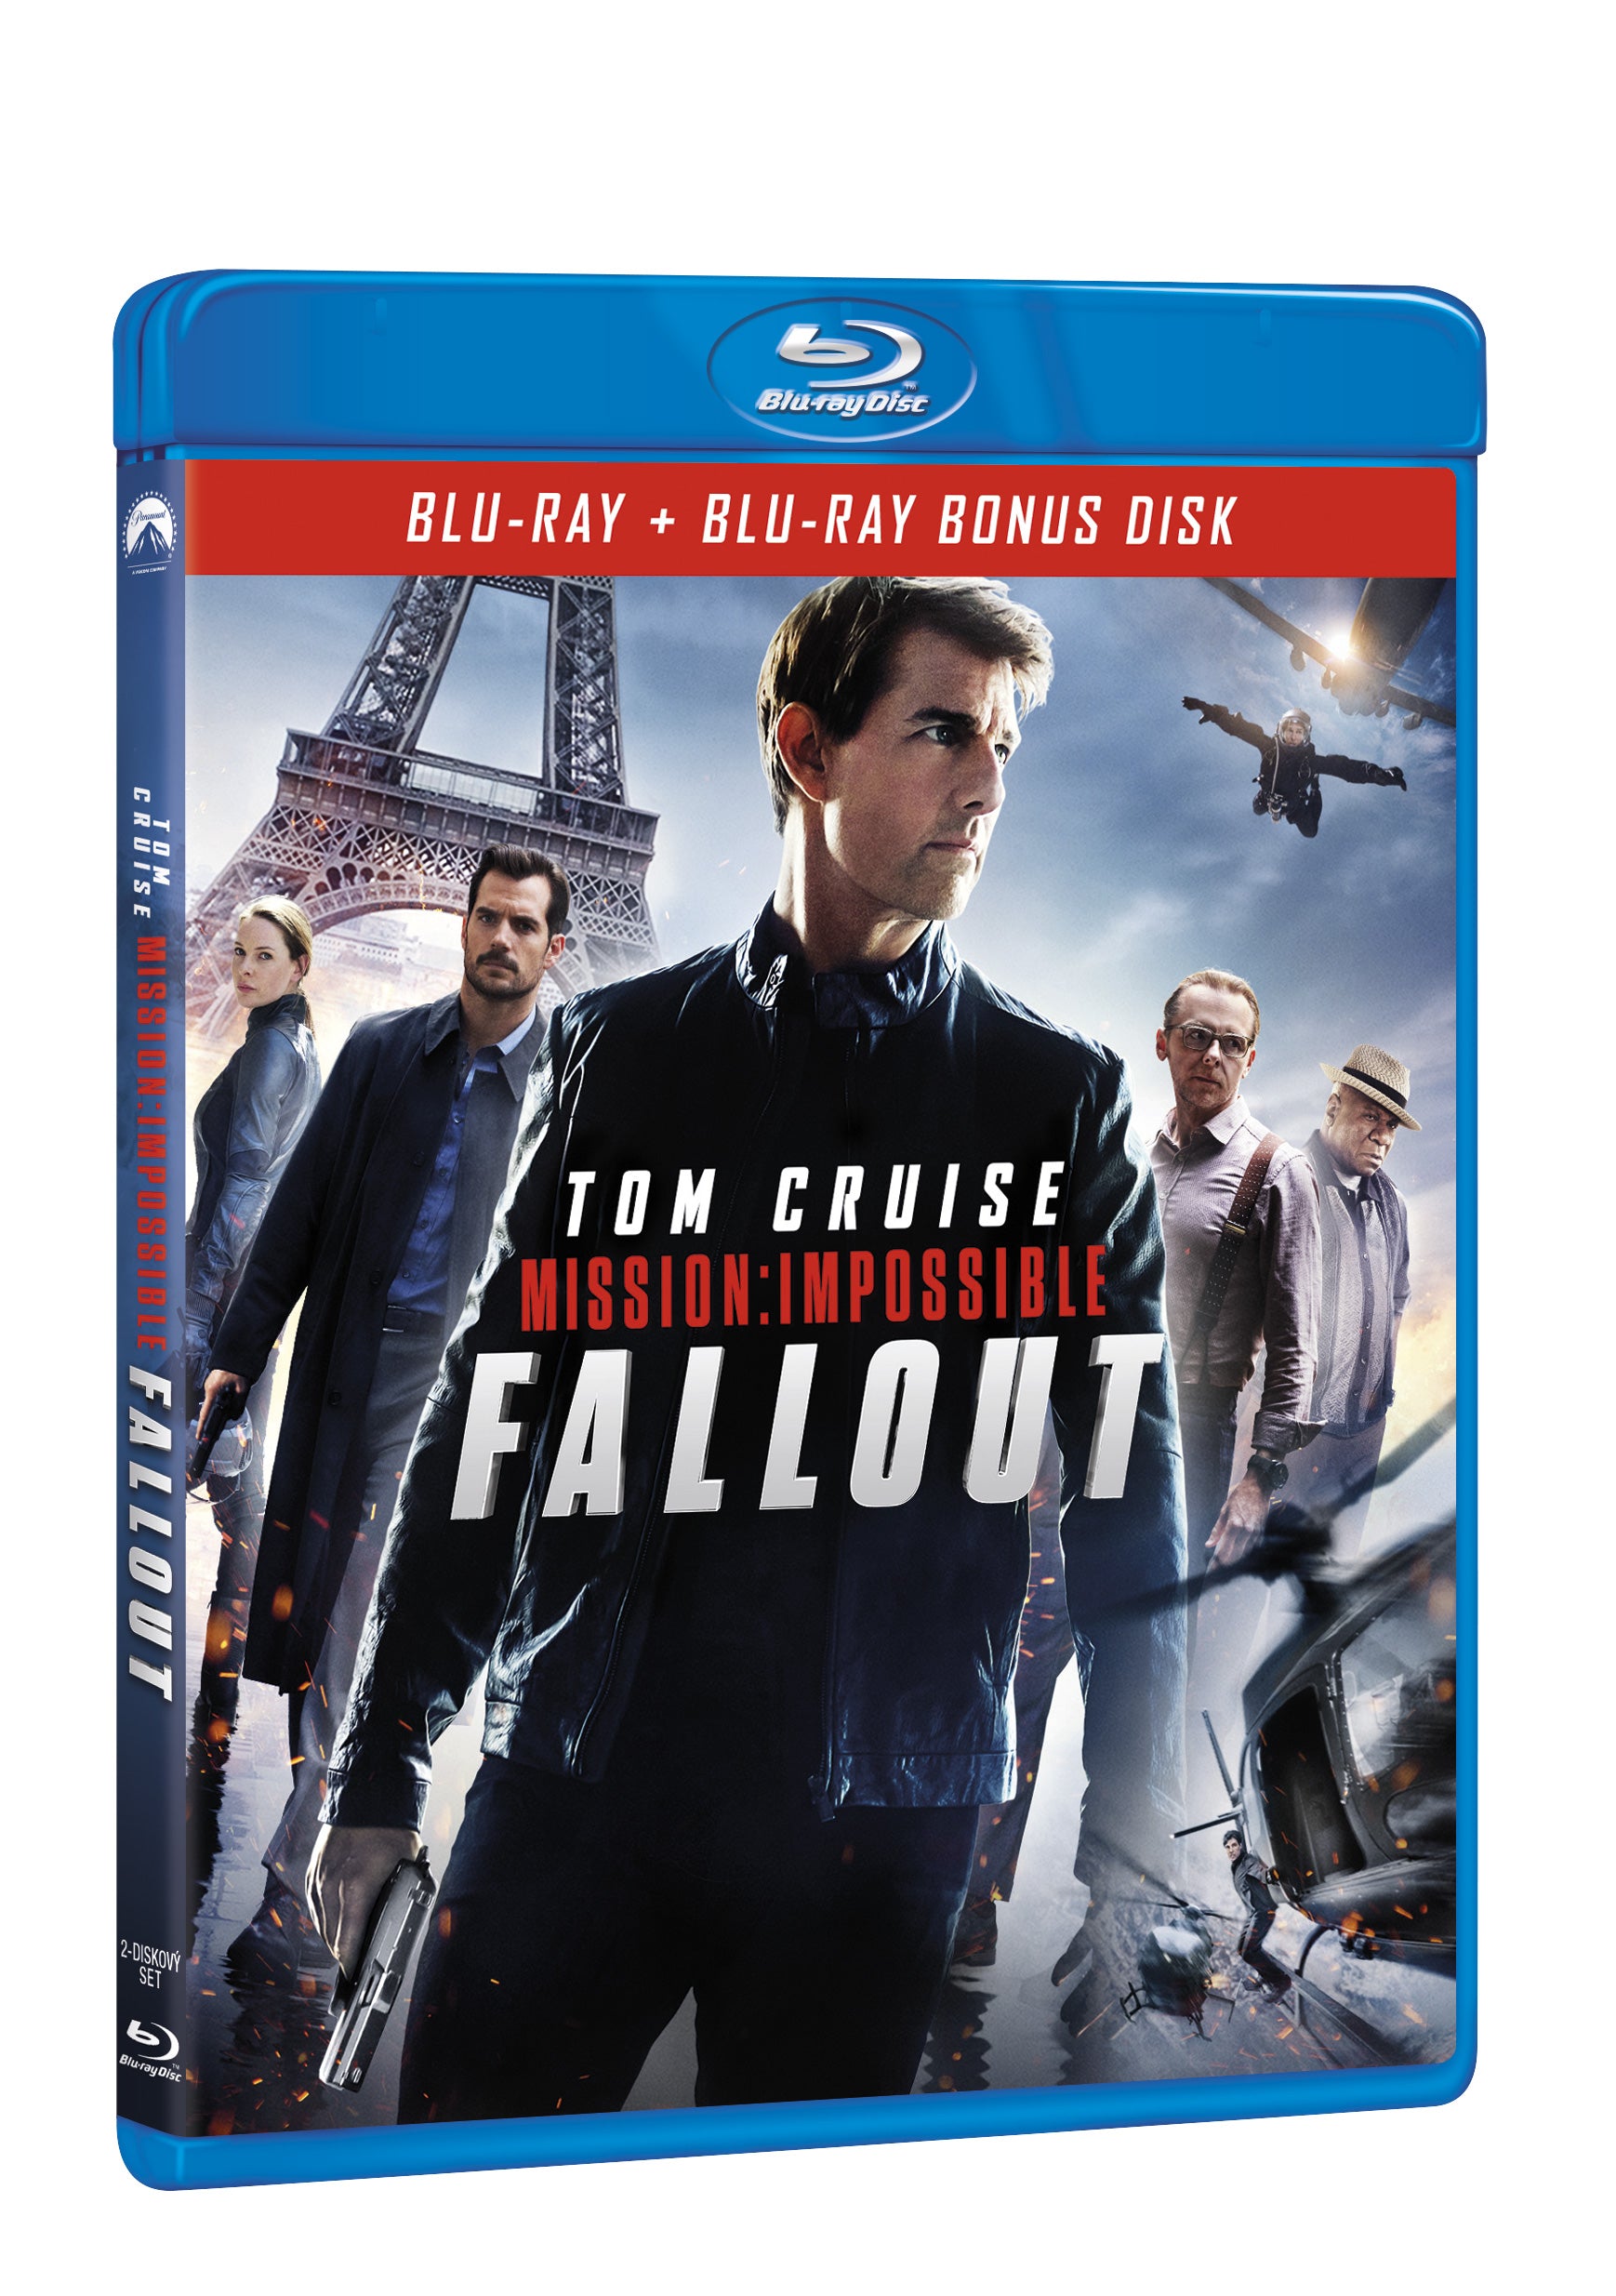 Mission: Impossible - Fallout 2BD (BD+bonus disk) / Mission: Impossible - Fallout - Czech version